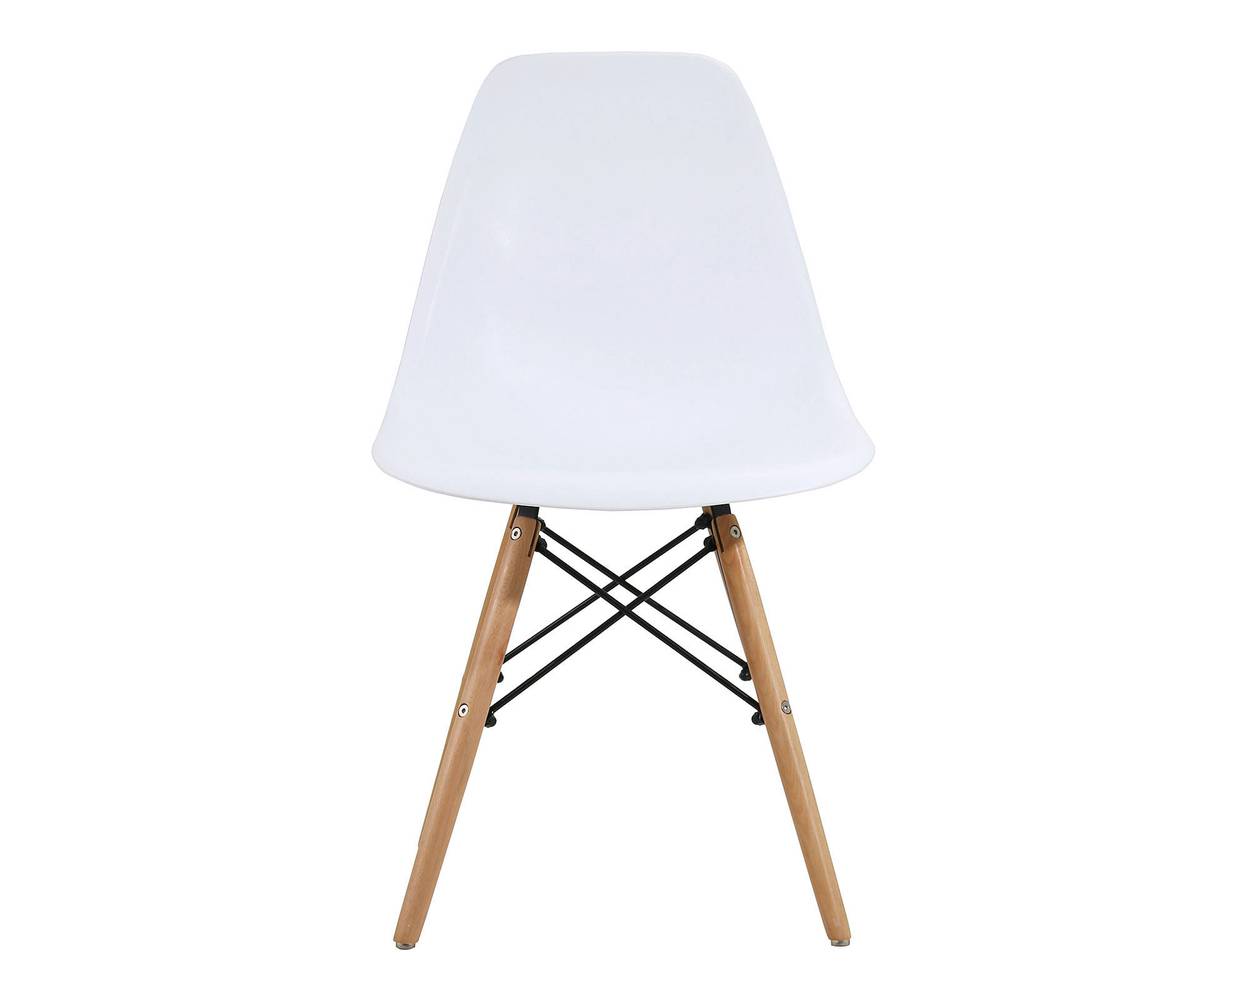 M+design silla atril 3.0 blanco (46 x 55 x 81)